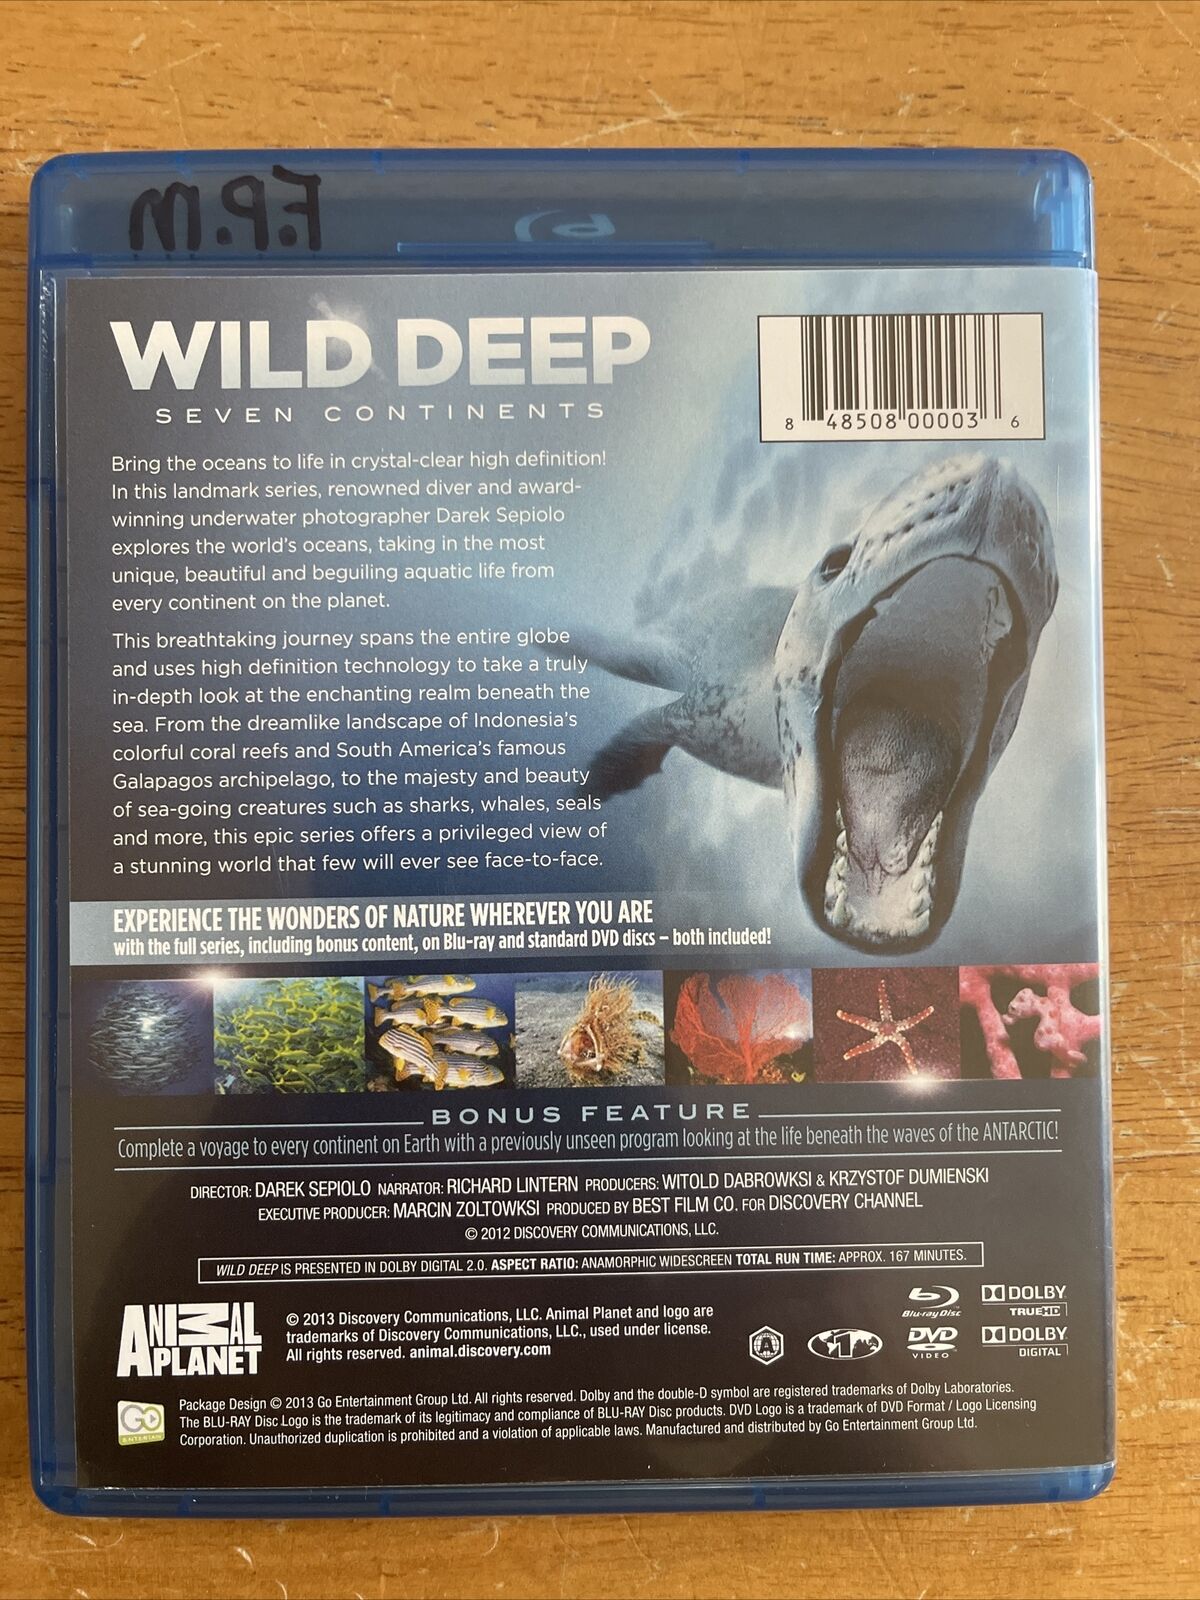 Animal Planet: Wild Deep Seven Continents (Blu-ray & DVD Combo)  848508000036 | eBay